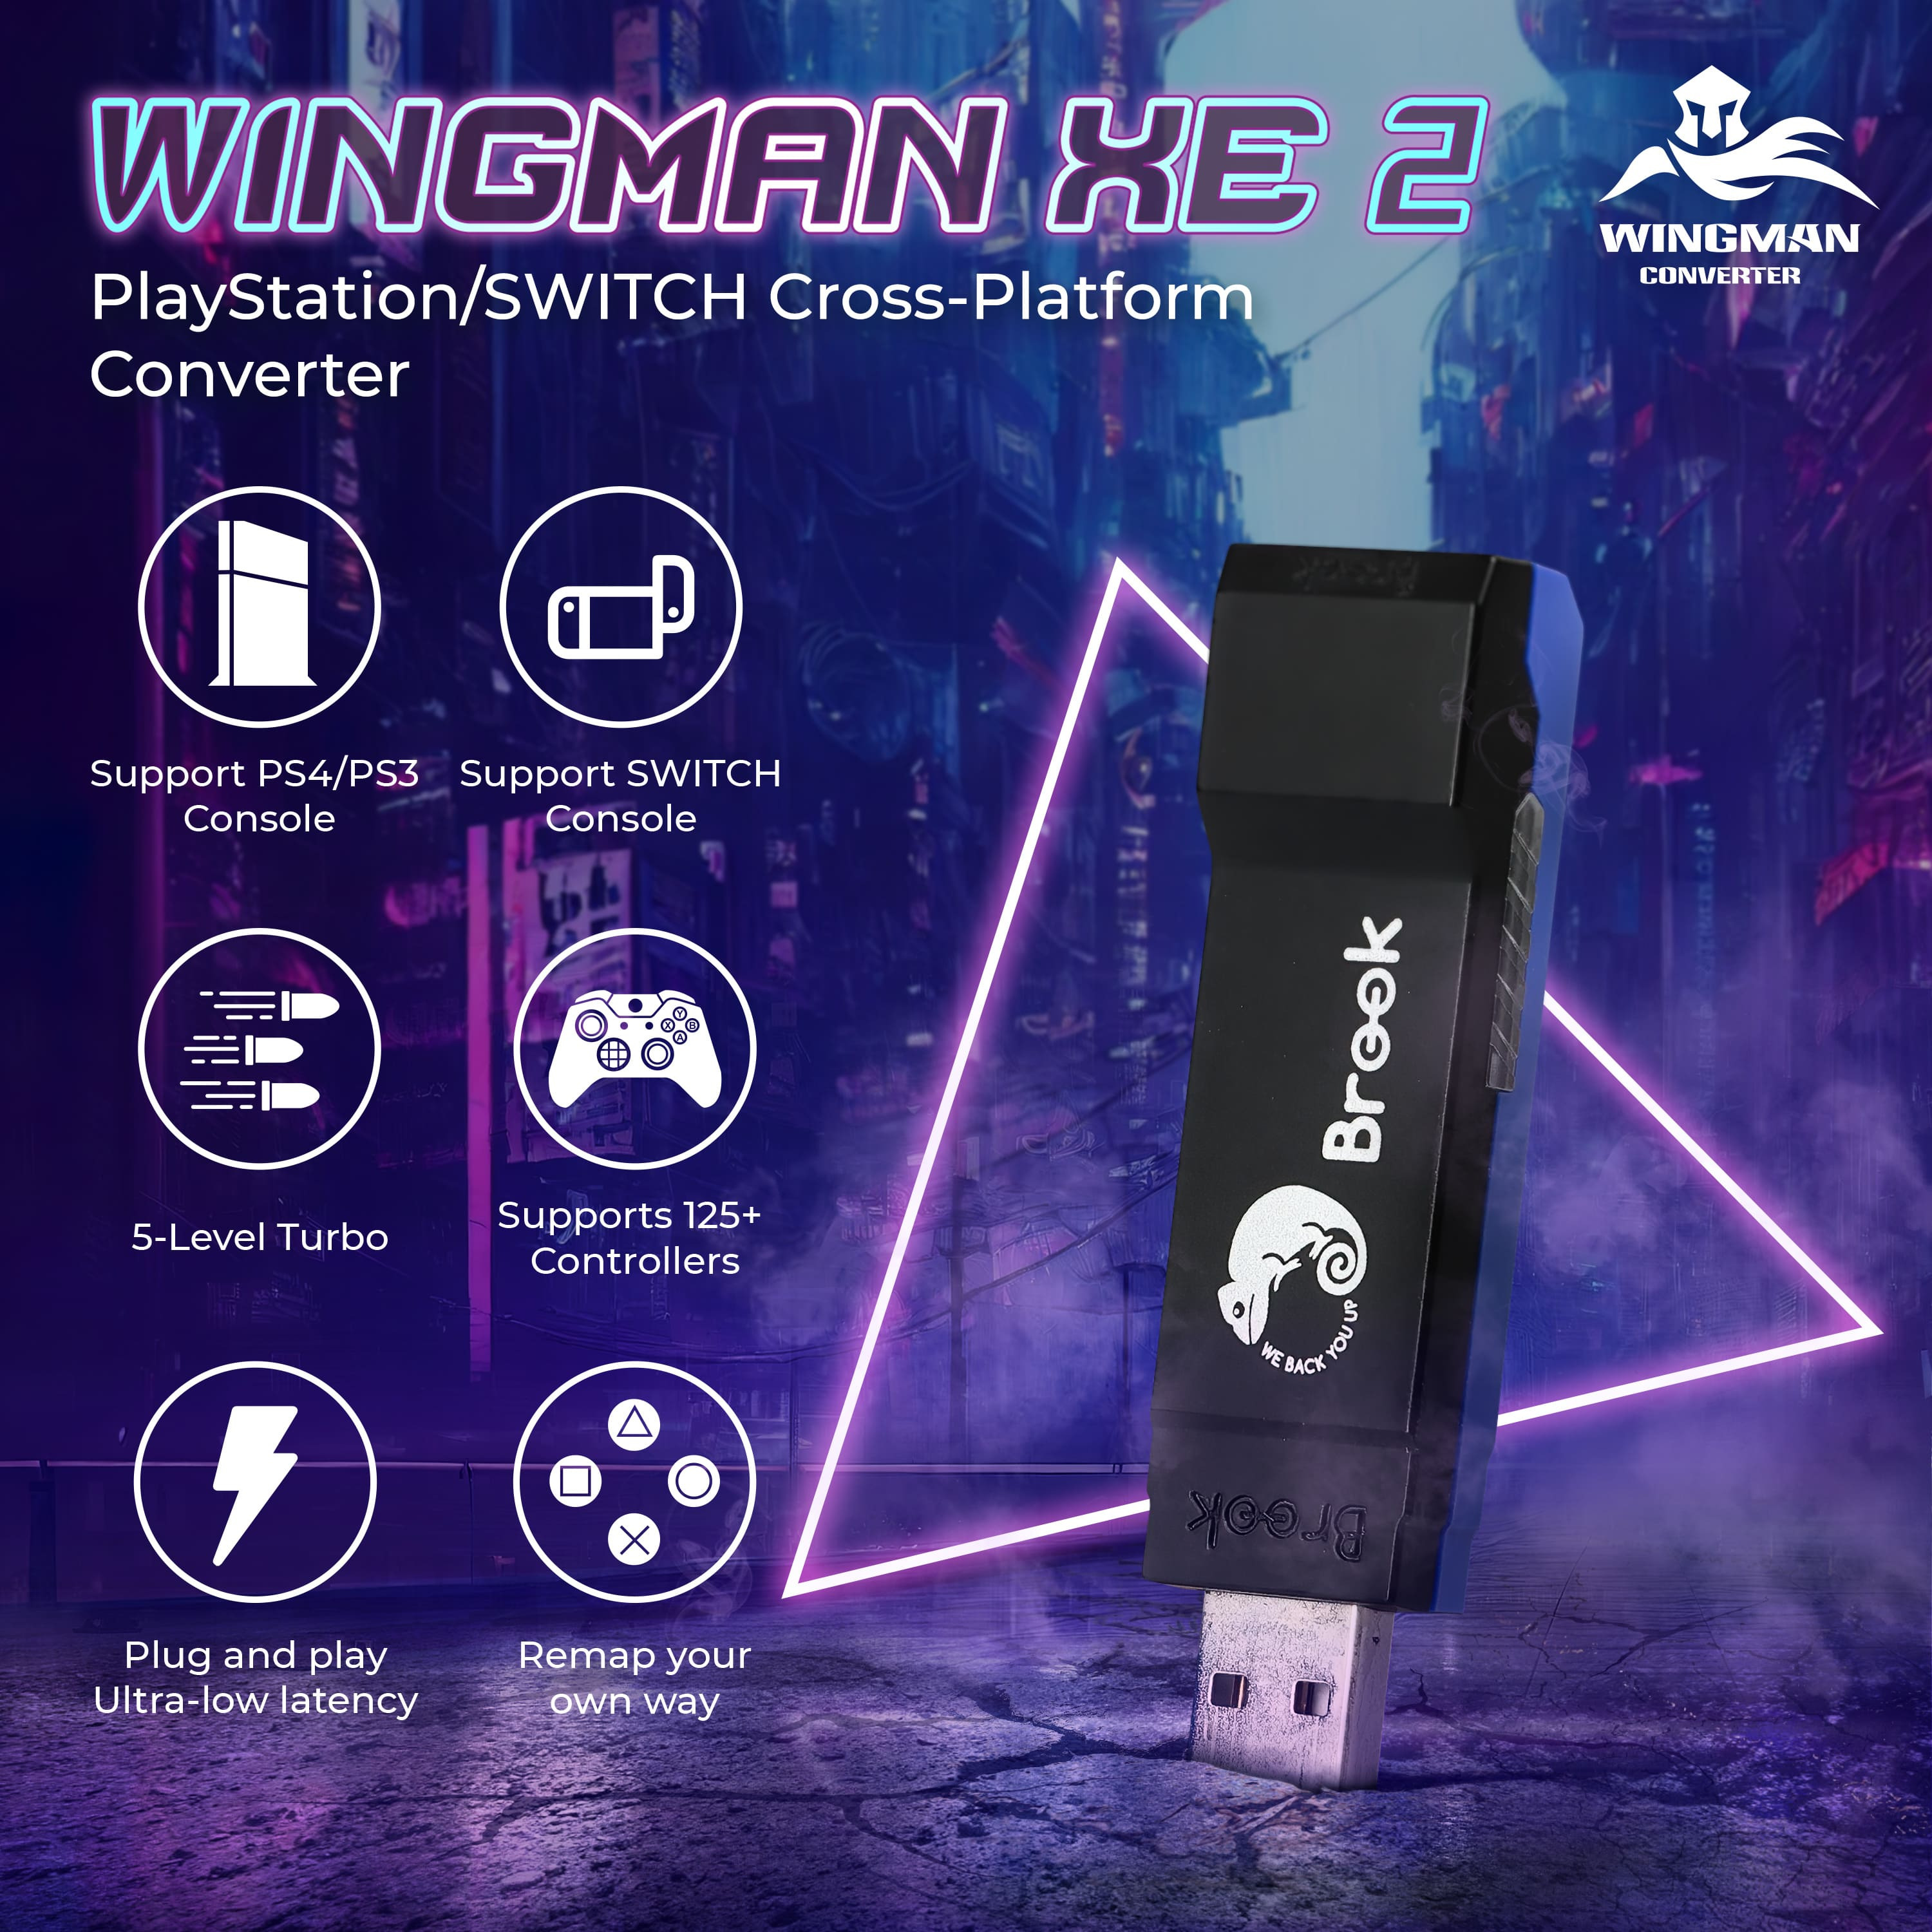 Wingman XE2